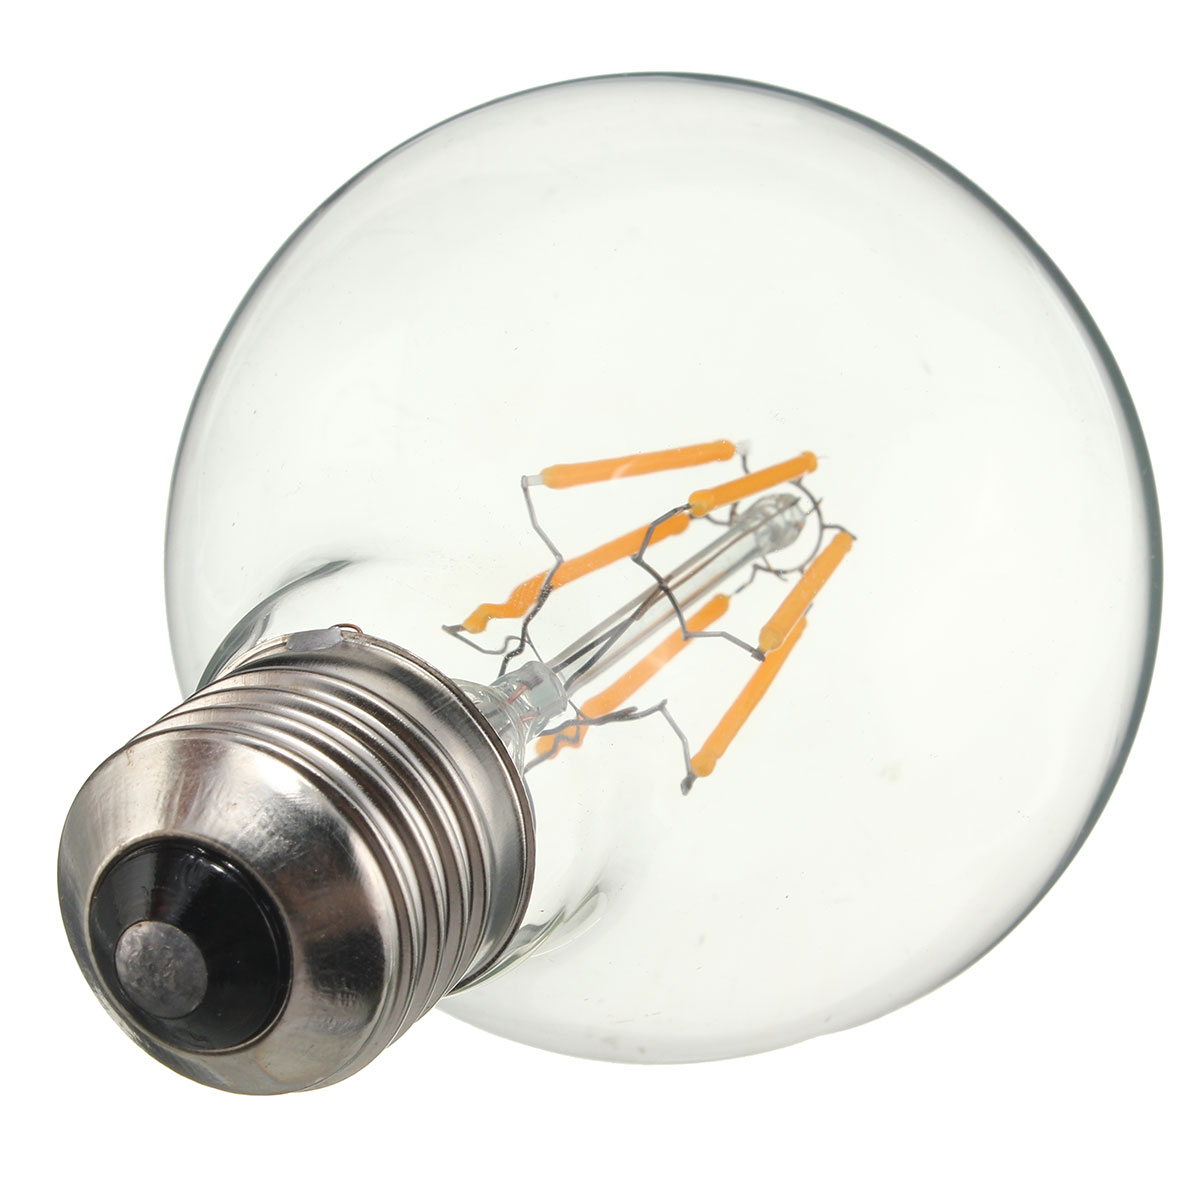 Dimmable-G80-E27-6W-COB-Warm-White-600Lumens-Retro-Vintage-Light-Lamp-Bulb-AC110V-AC220V-1074483-8